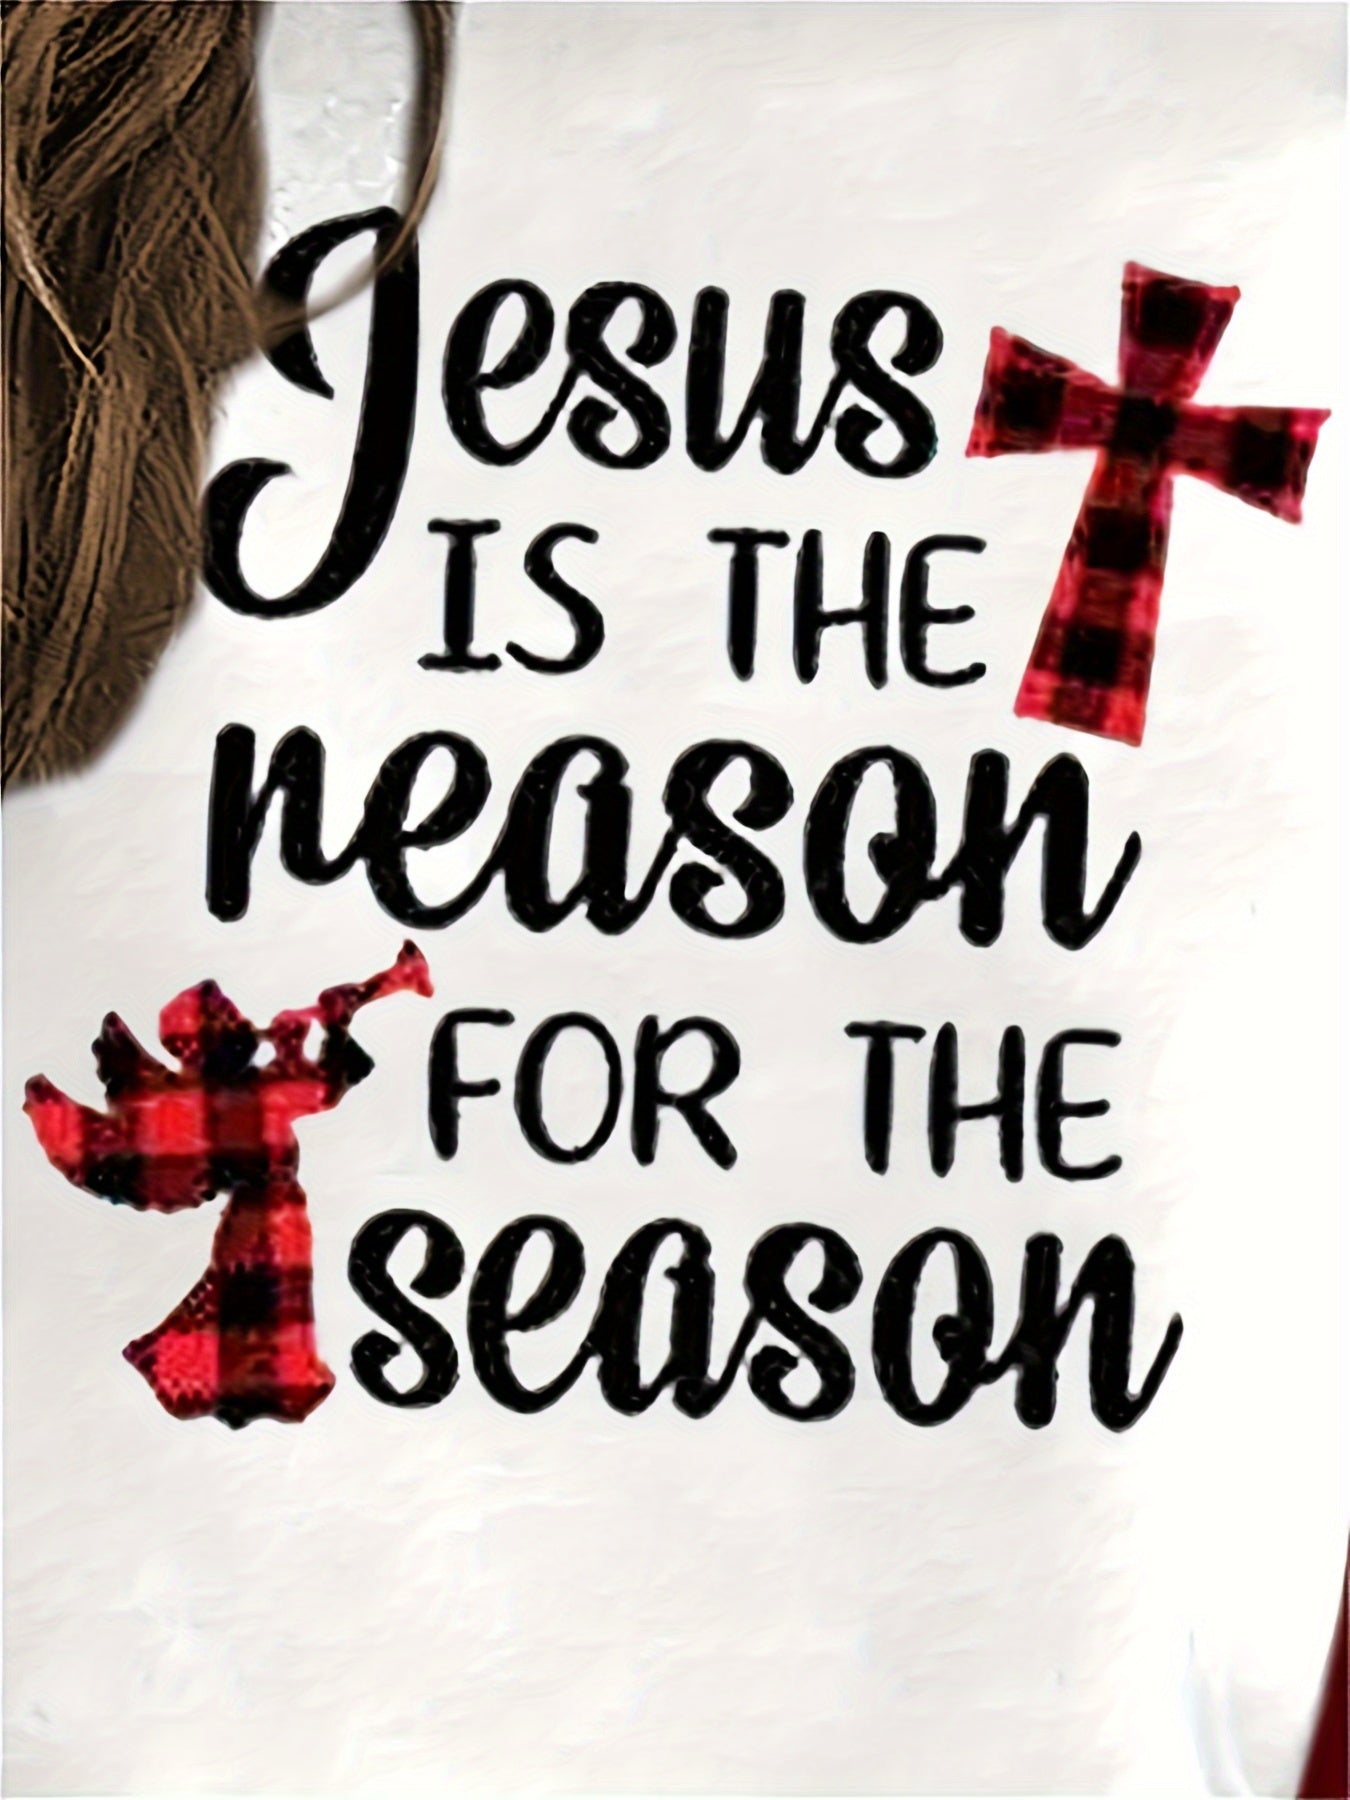 Jesus Is The Reason For The Season (Christmas Themed) Women's Christian Pullover Sweatshirt claimedbygoddesigns